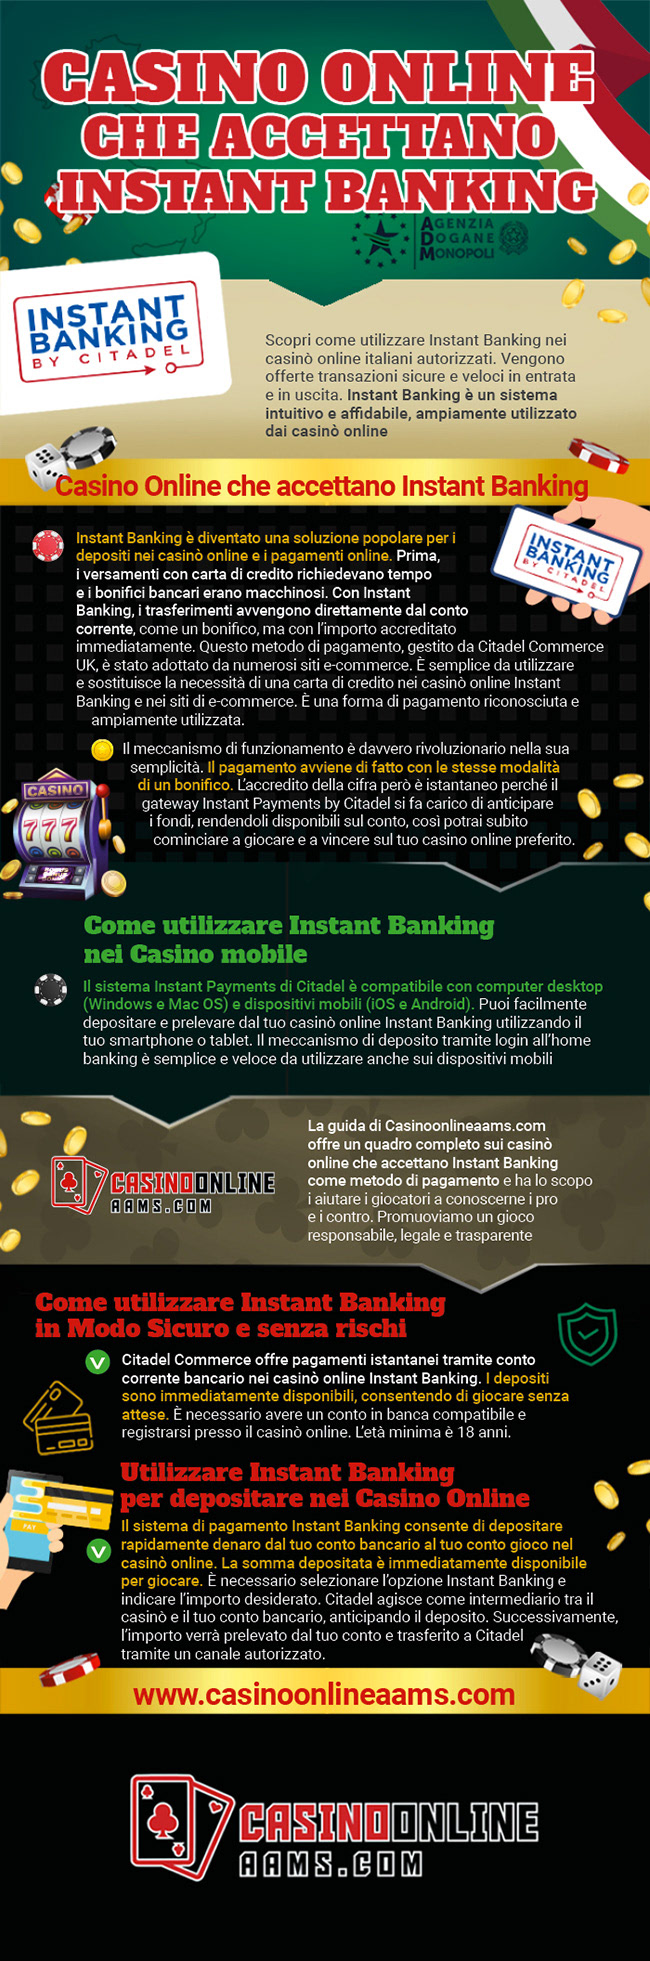 Casino Online poker online gratta e vinci casino bingo online giochi online lotterie online scommesse online бонус